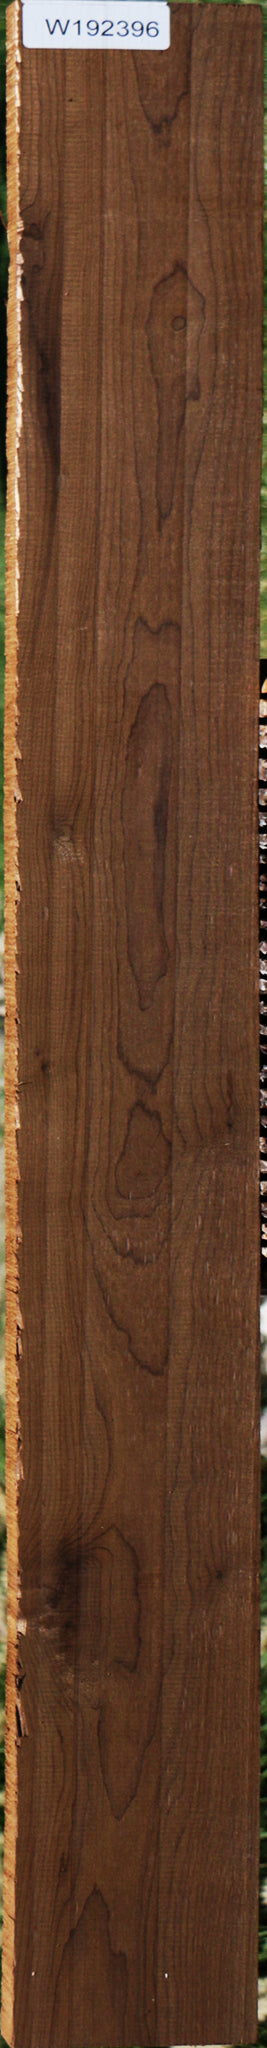 Curly Caramelized Maple Lumber